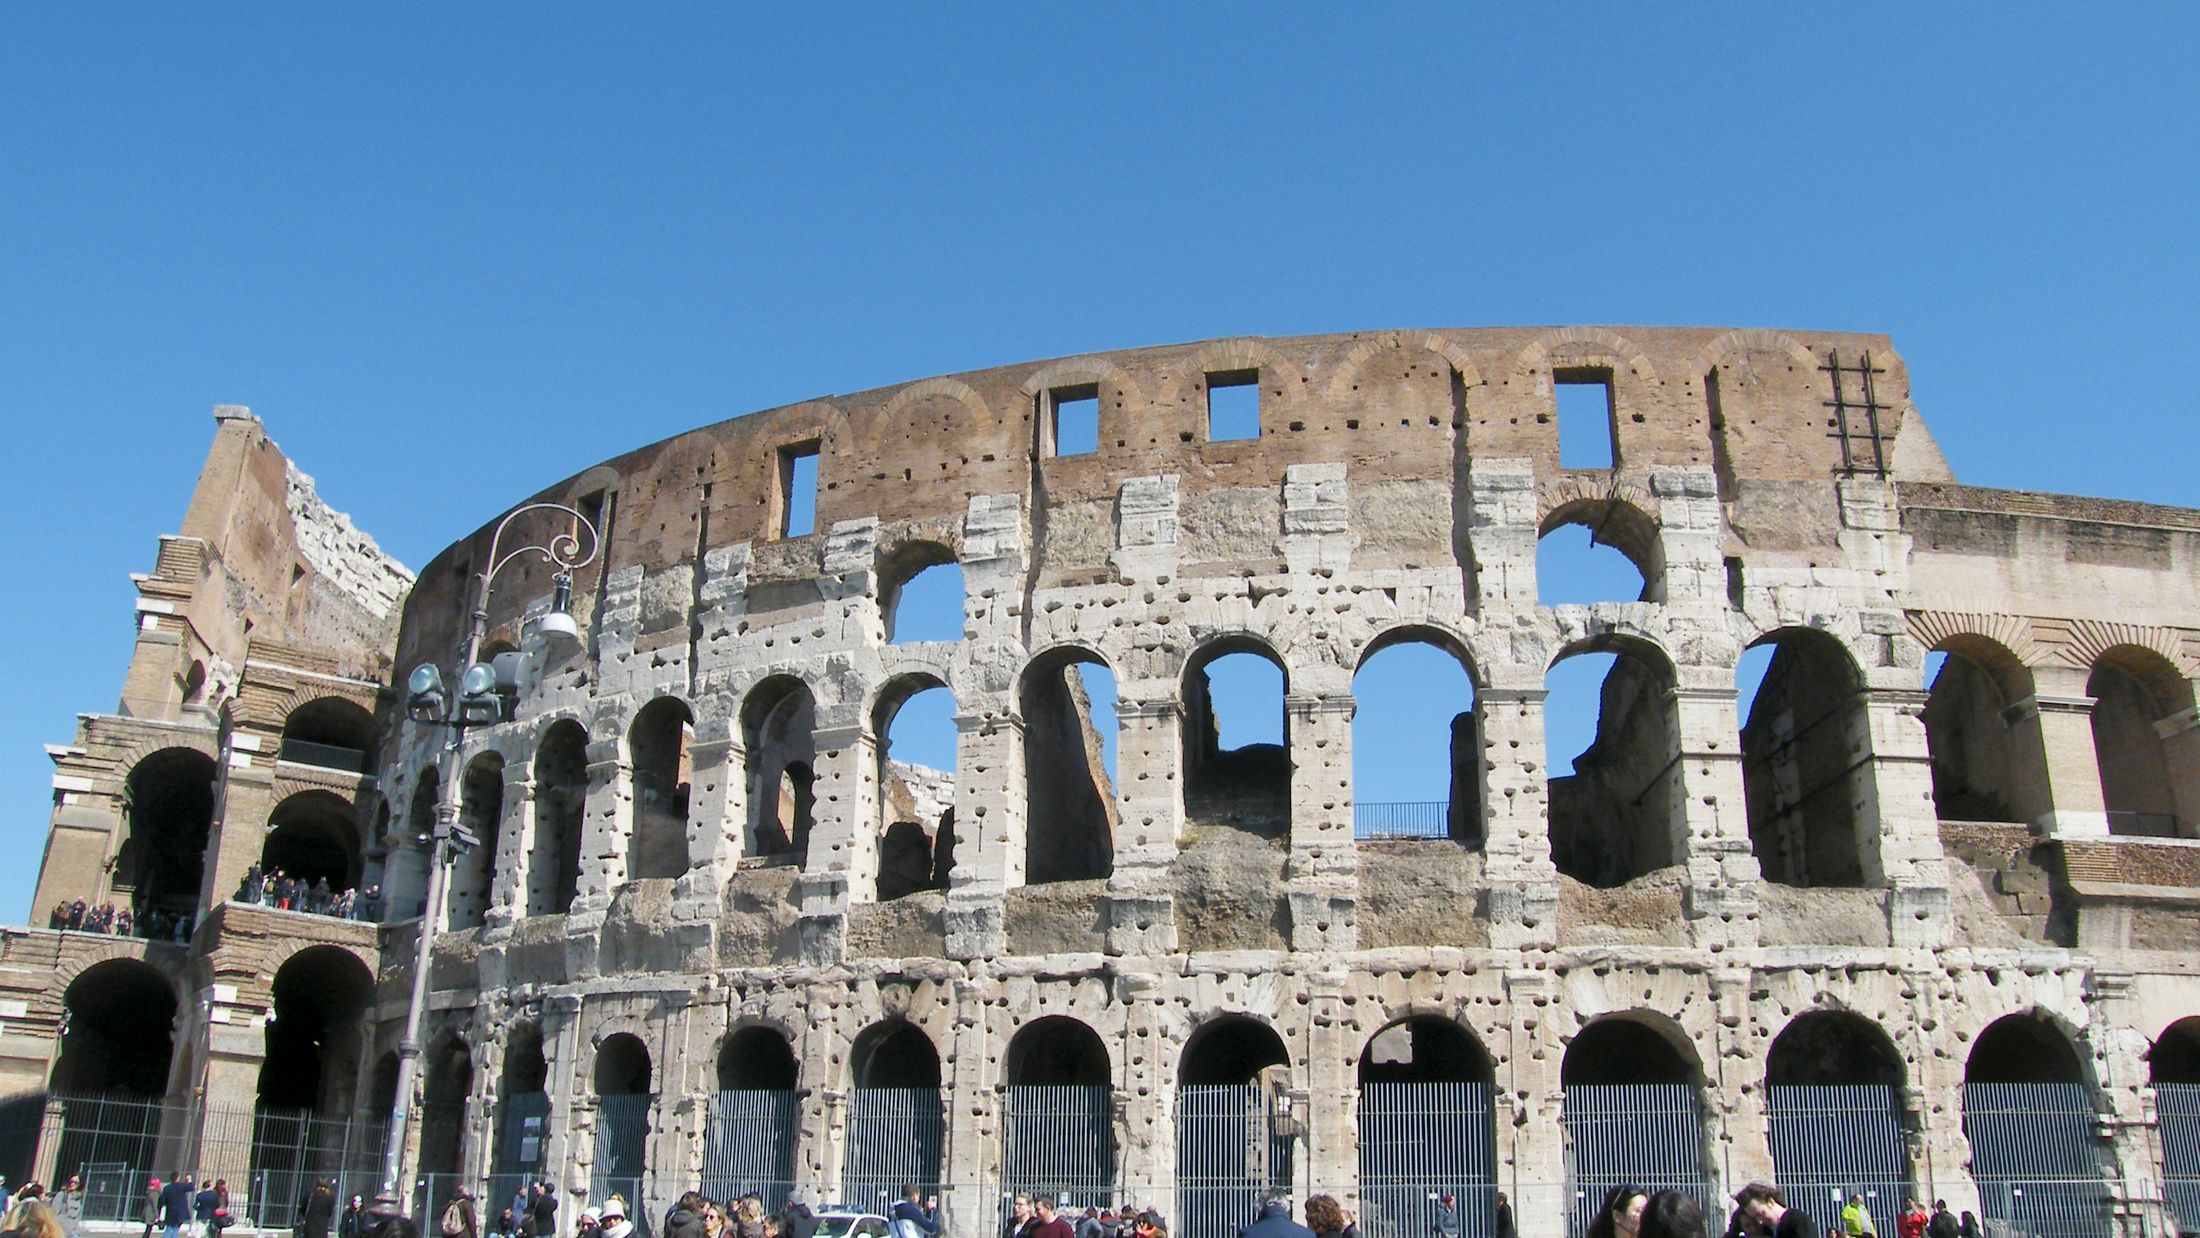 000940_Colosseum_Rome_Italy_Mick Barnard_no model release signed_004-Hybris